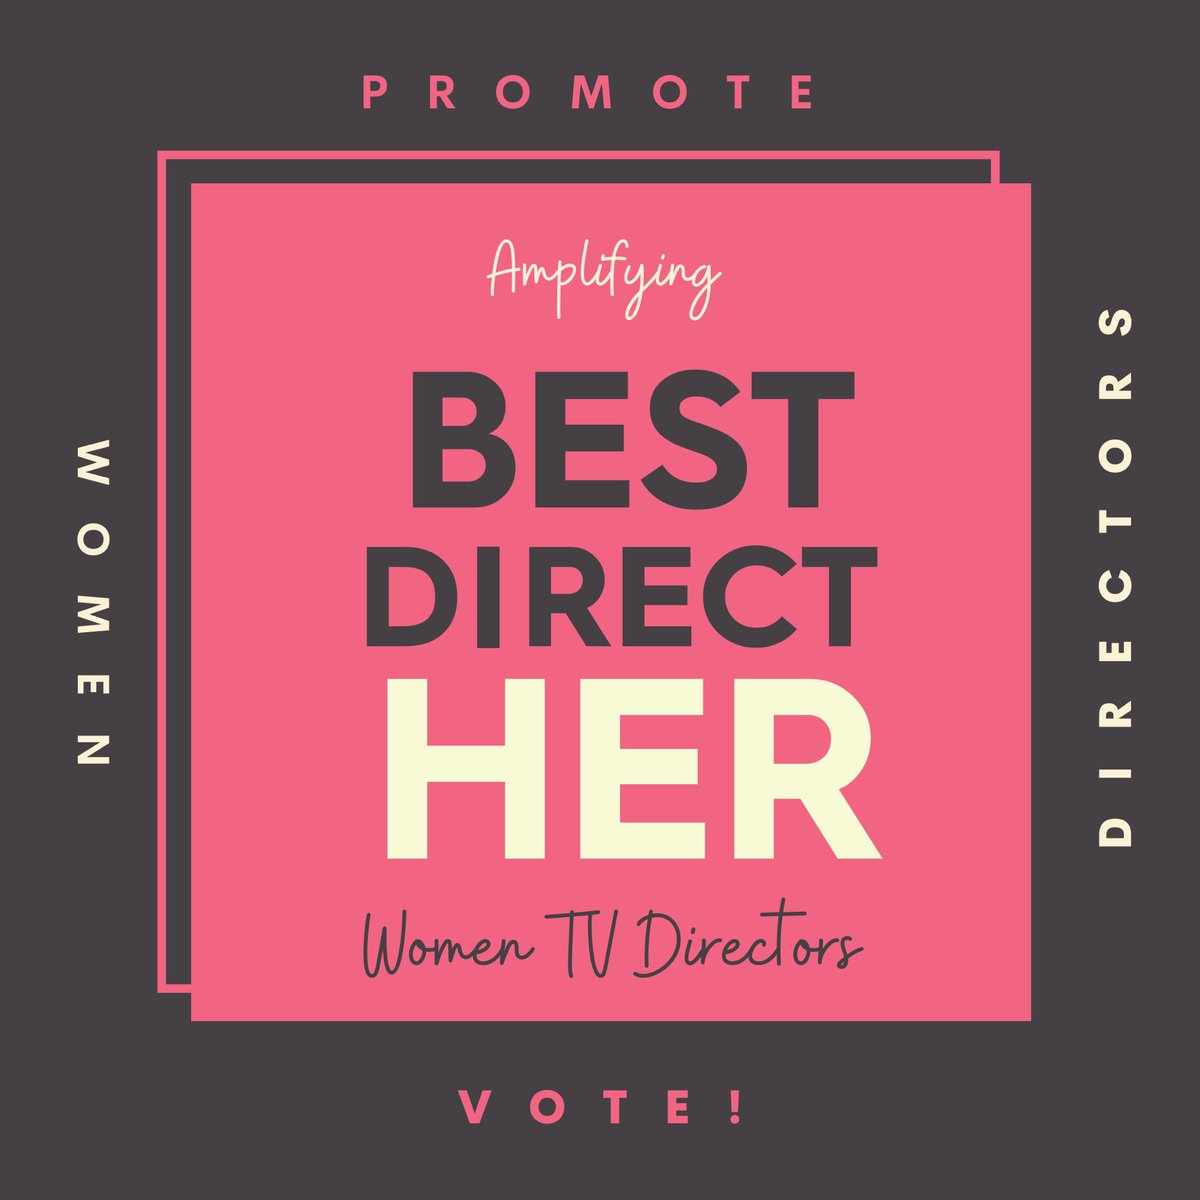 #DGAMembers! VOTE 4 @directorsguild #TV Noms!
1. Make shortlist✍️
2. Follow @bestdirecther
3. Watch women-directed TV
5. Vote by 3/8: bit.ly/3kdiqfy
#bestdirecther #FYC #DGA #DGAAwards #femalefilmmaker #TVAwards #womendirect #ParityinAction #womendirectors #VoteForWomen